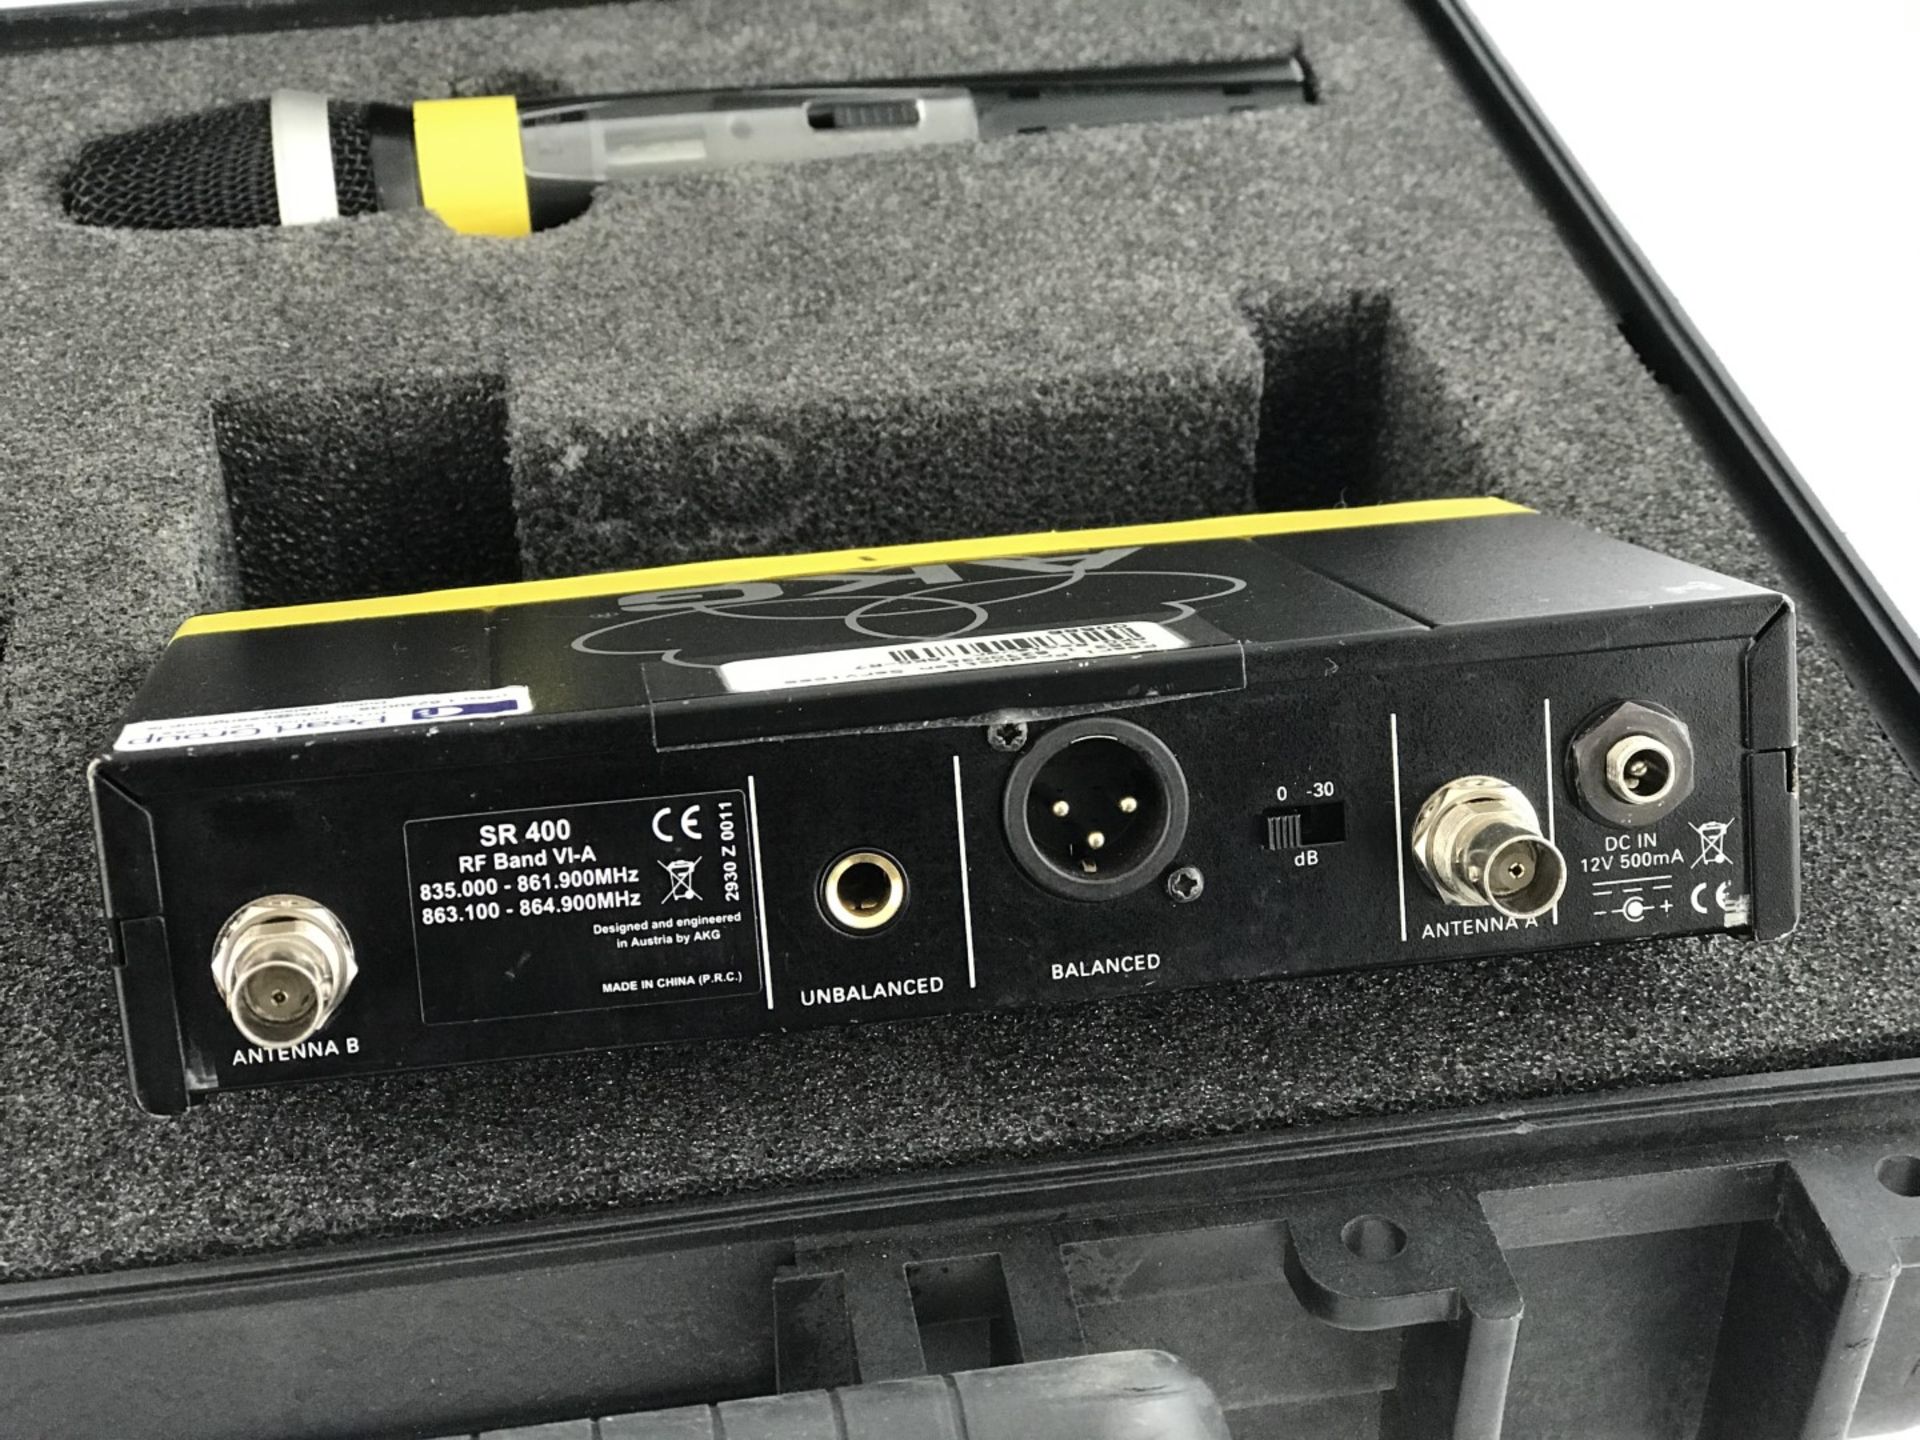 1 x AKG SR400 Hand Held Radio Microphone & Receiver With Aerials, Clip & PSU In Hard Flight Case - - Image 2 of 2